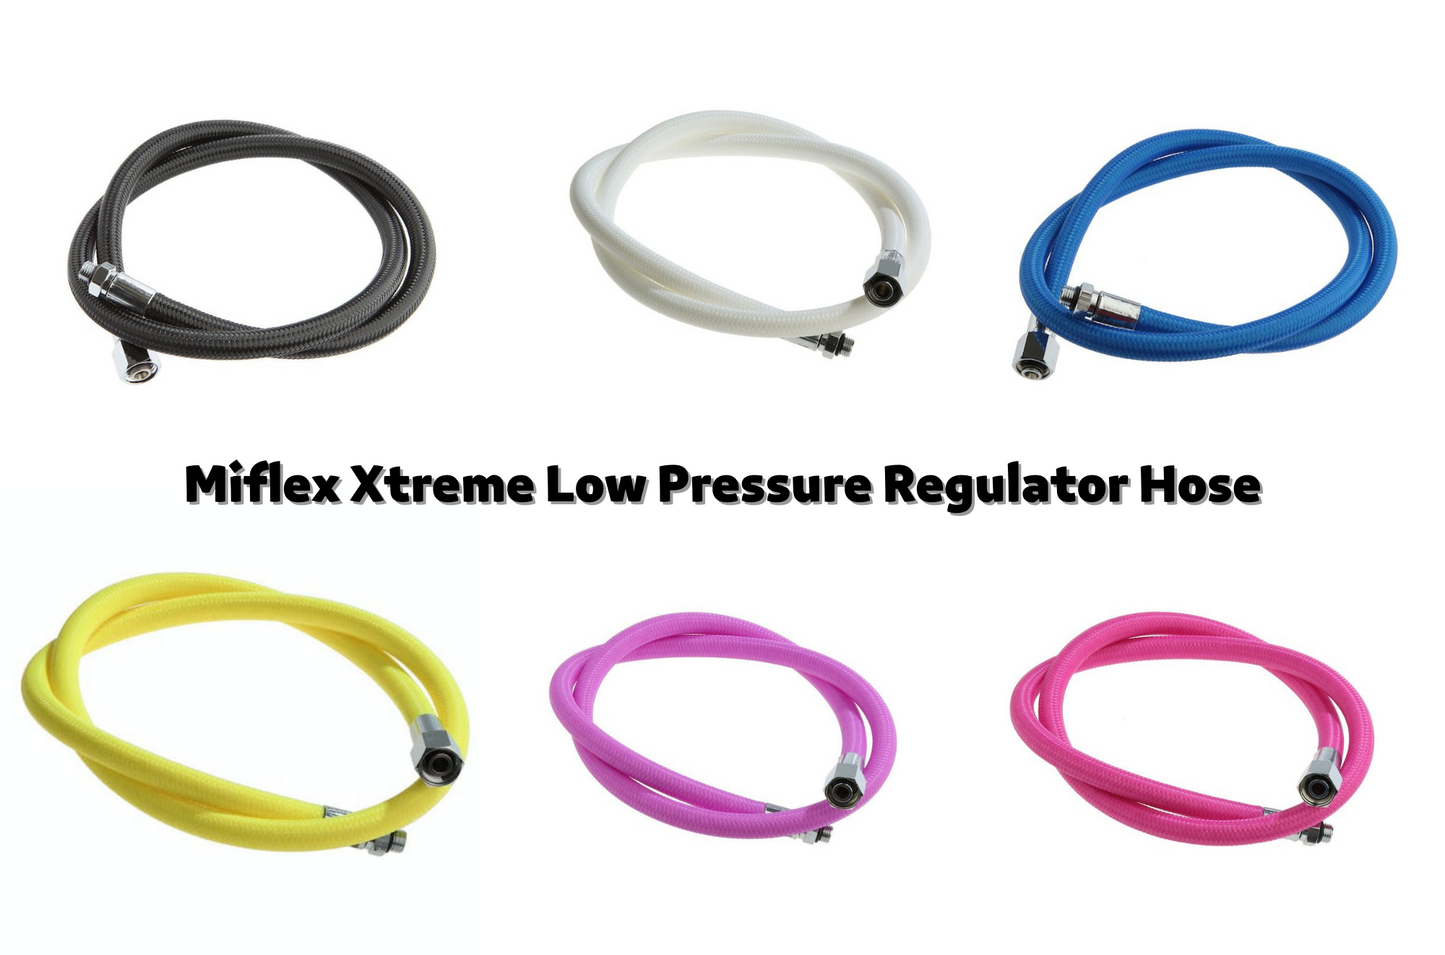 Miflex Xtreme 低压调节软管